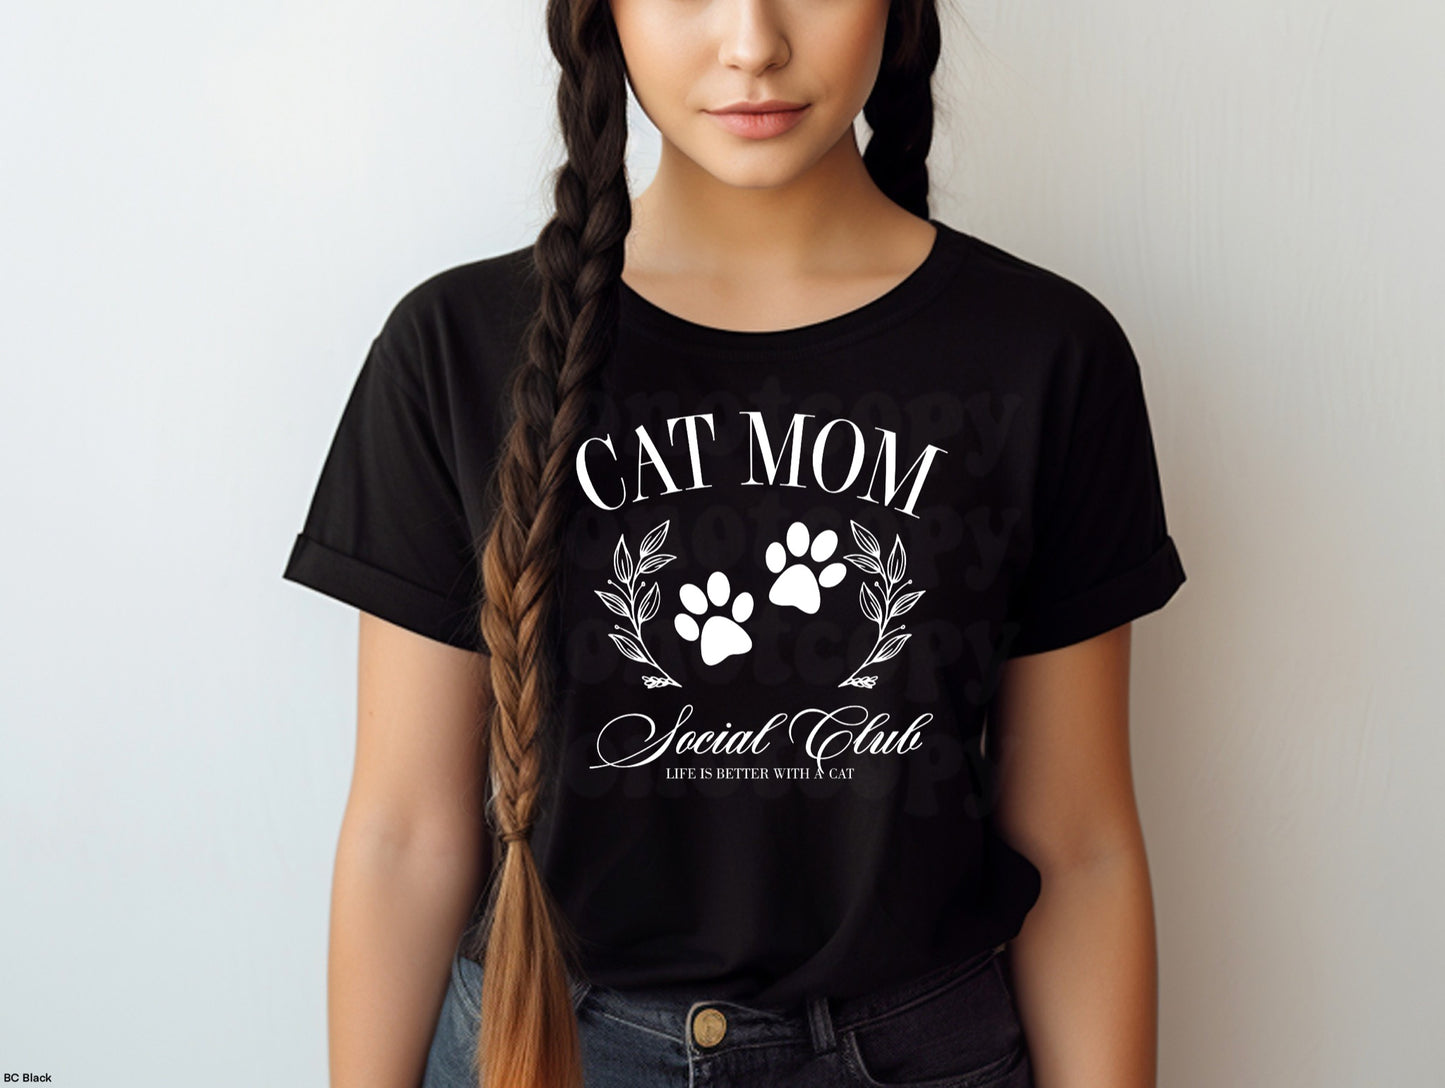 Cat Mom Social Club